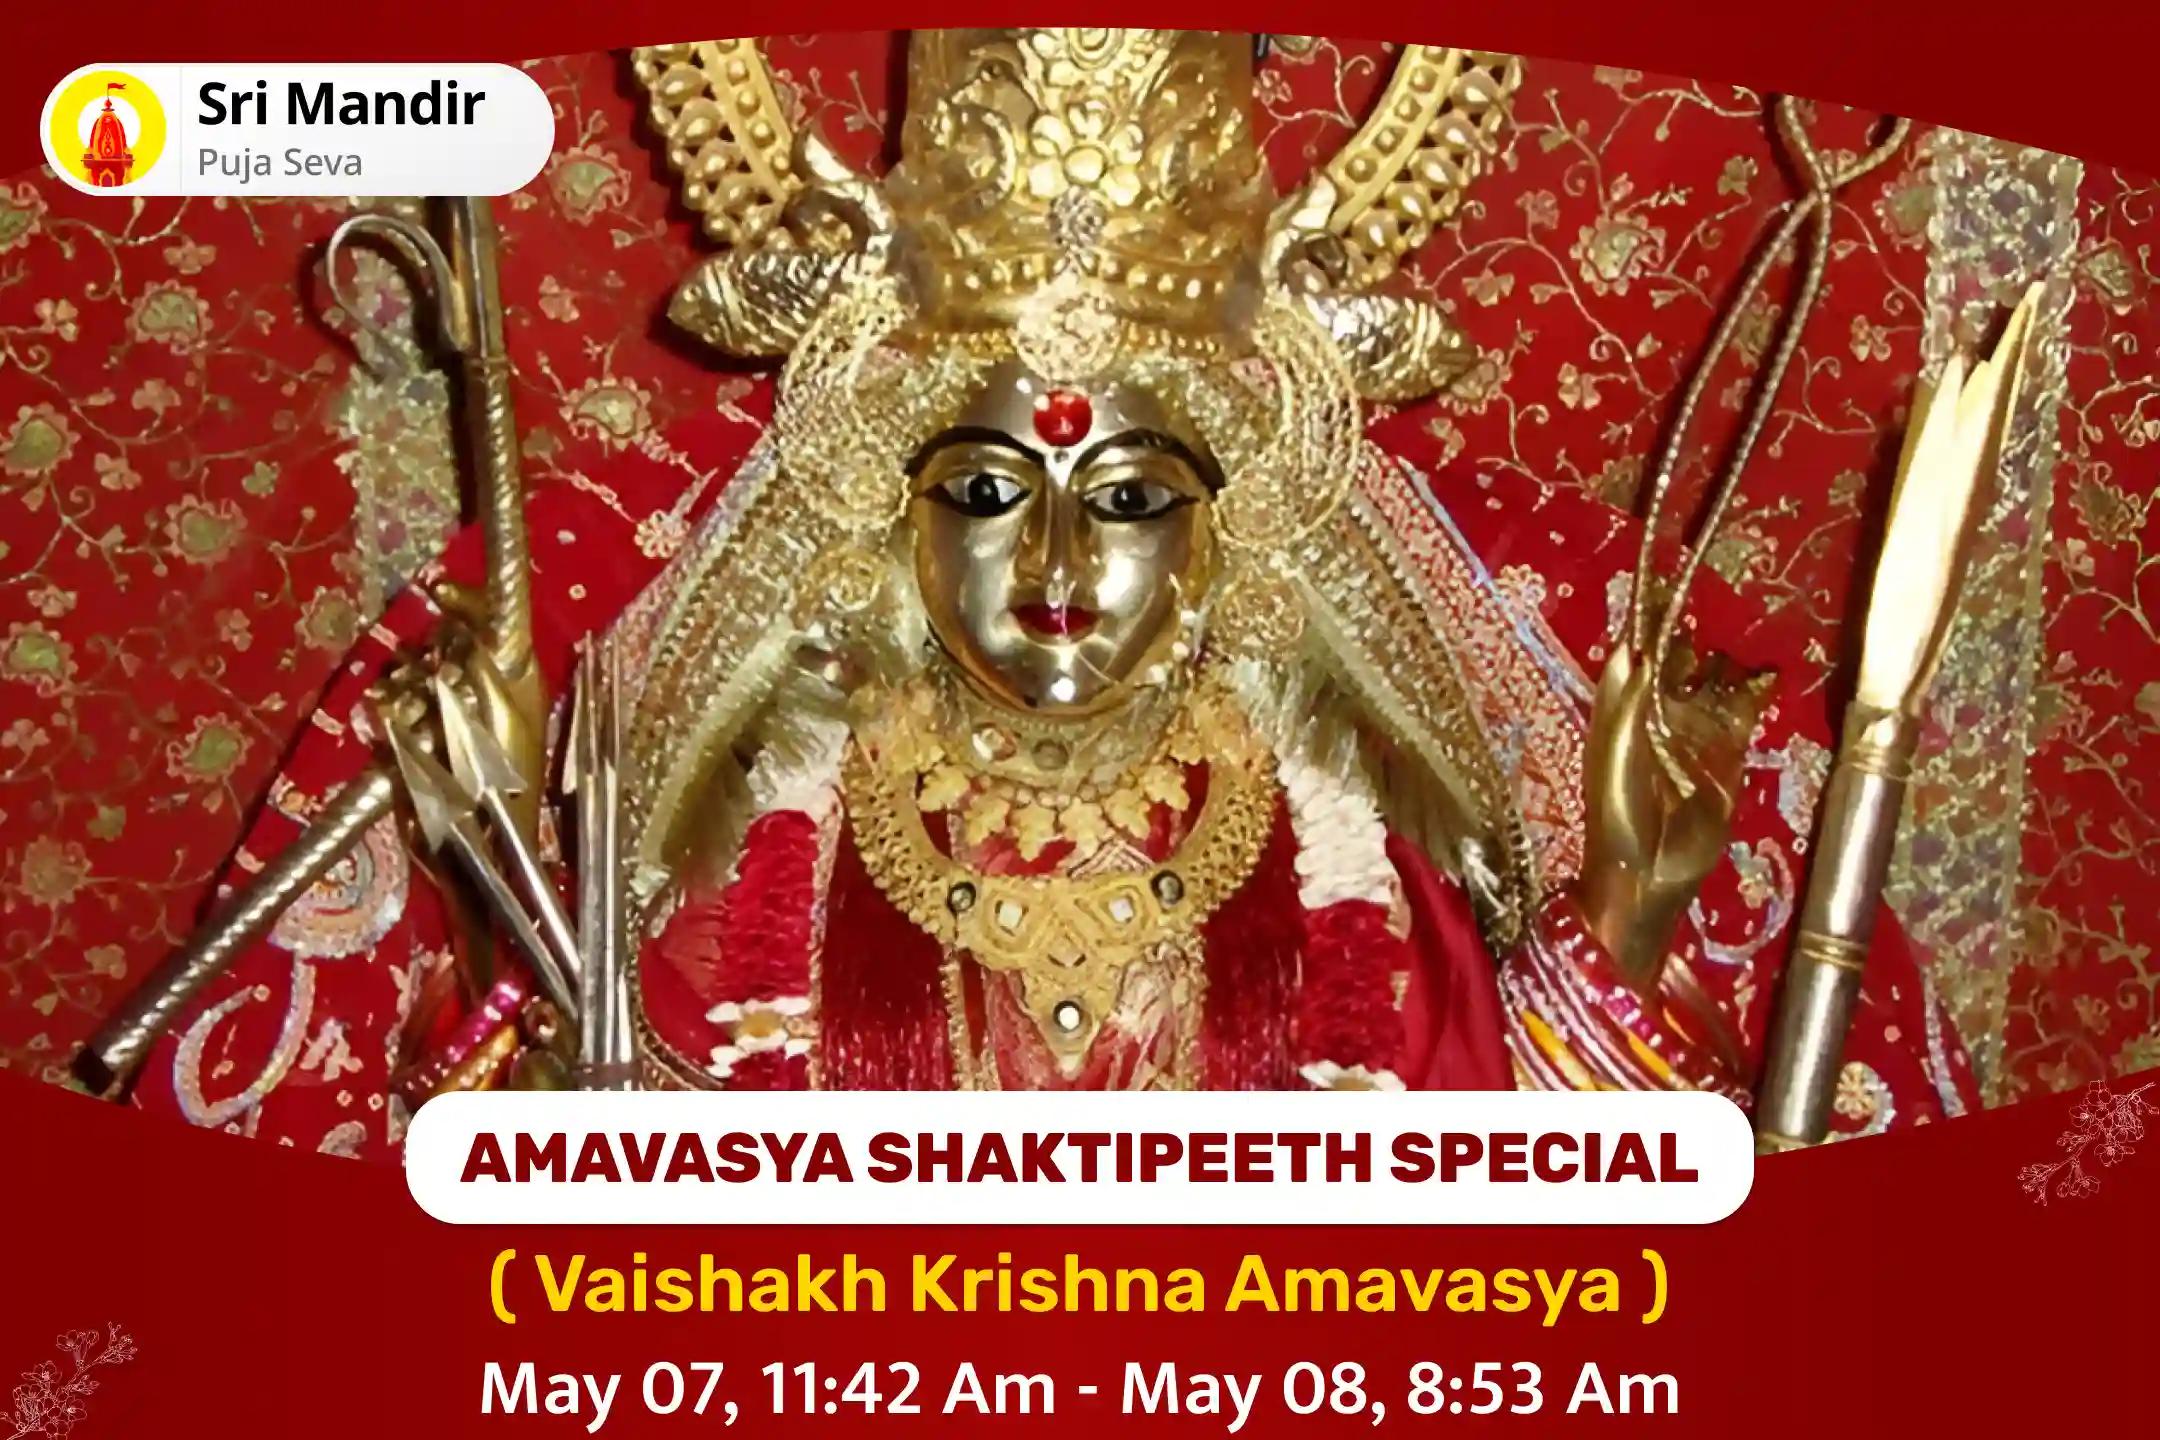 Amavasya Shaktipeeth Special Maa Katyayani Ashtakam Stotra Path, Bhog Aarti and Bhuteshwar Panchakshari Mantra Jaap for Bliss in Relationship and Overcoming Obstacles